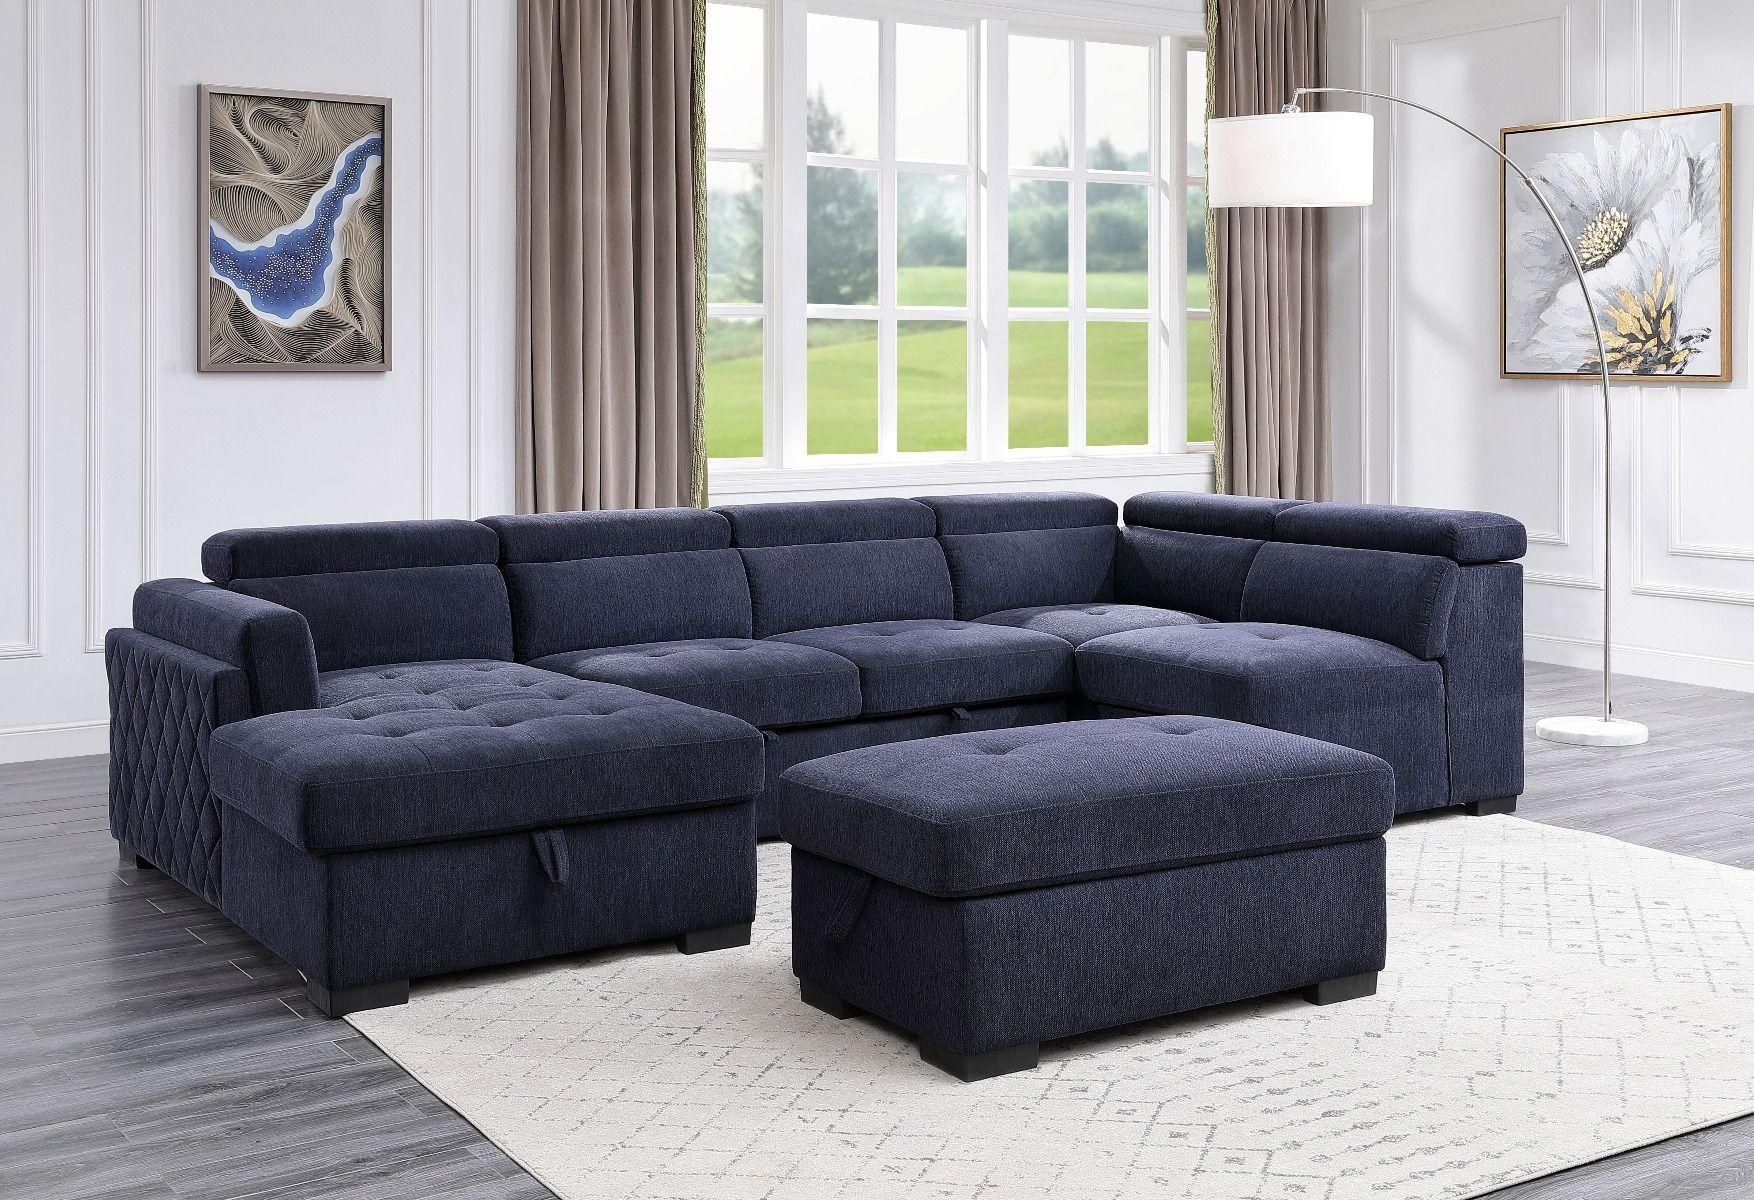 Contemporary Sectional Living Room Set Nekoda Sectional Sofa W/Storage & Ottoman 55520-SO-2PCS 55520-SO-2PCS in Navy blue Fabric